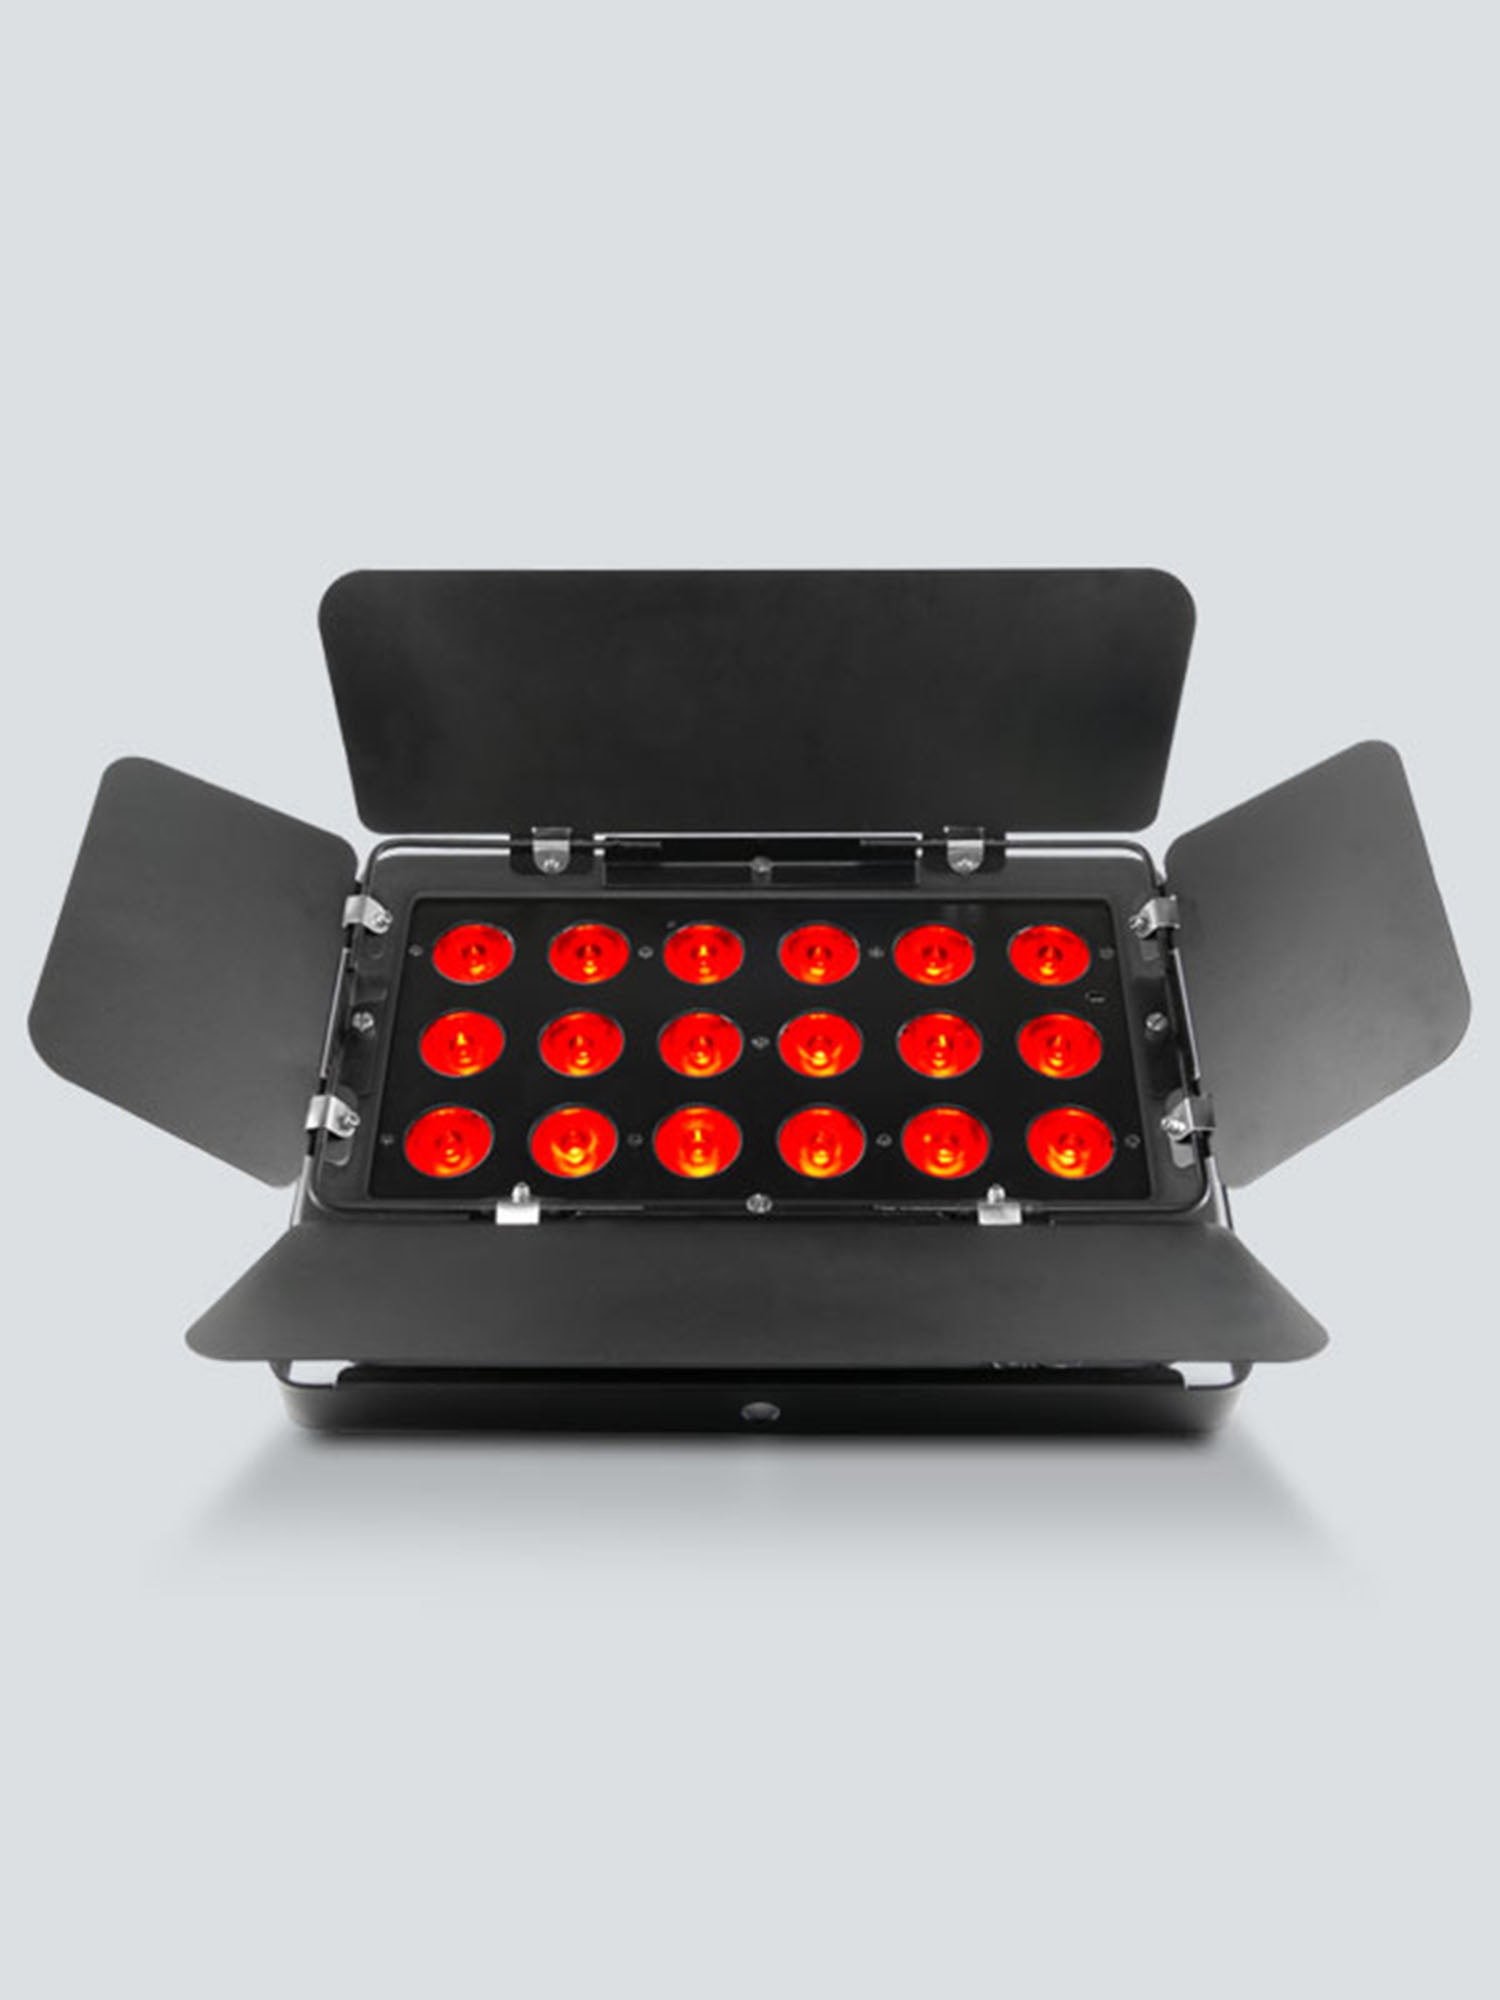 B-Stock: Chauvet SlimBANK T18 USB, Wireless DMX RGB LED Wash Light - Hollywood DJ